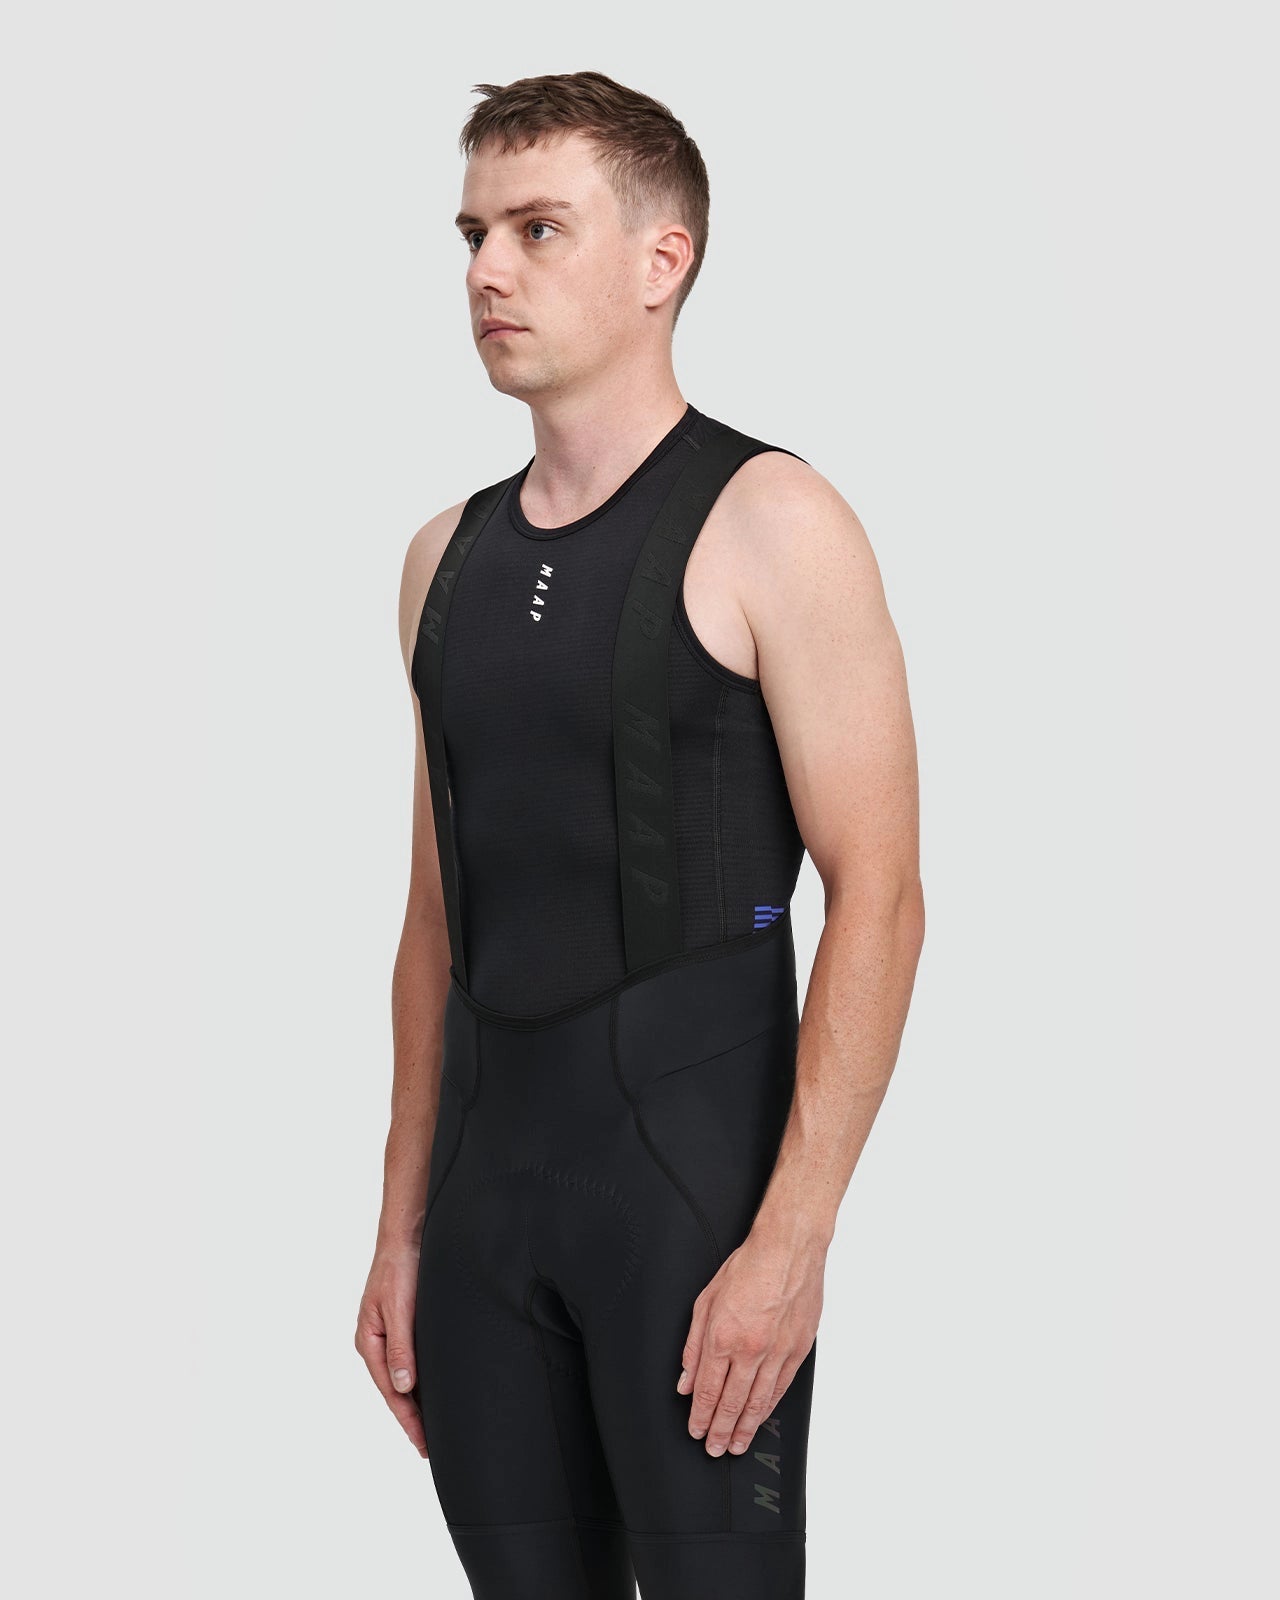 Thermal Base Layer Vest - Black